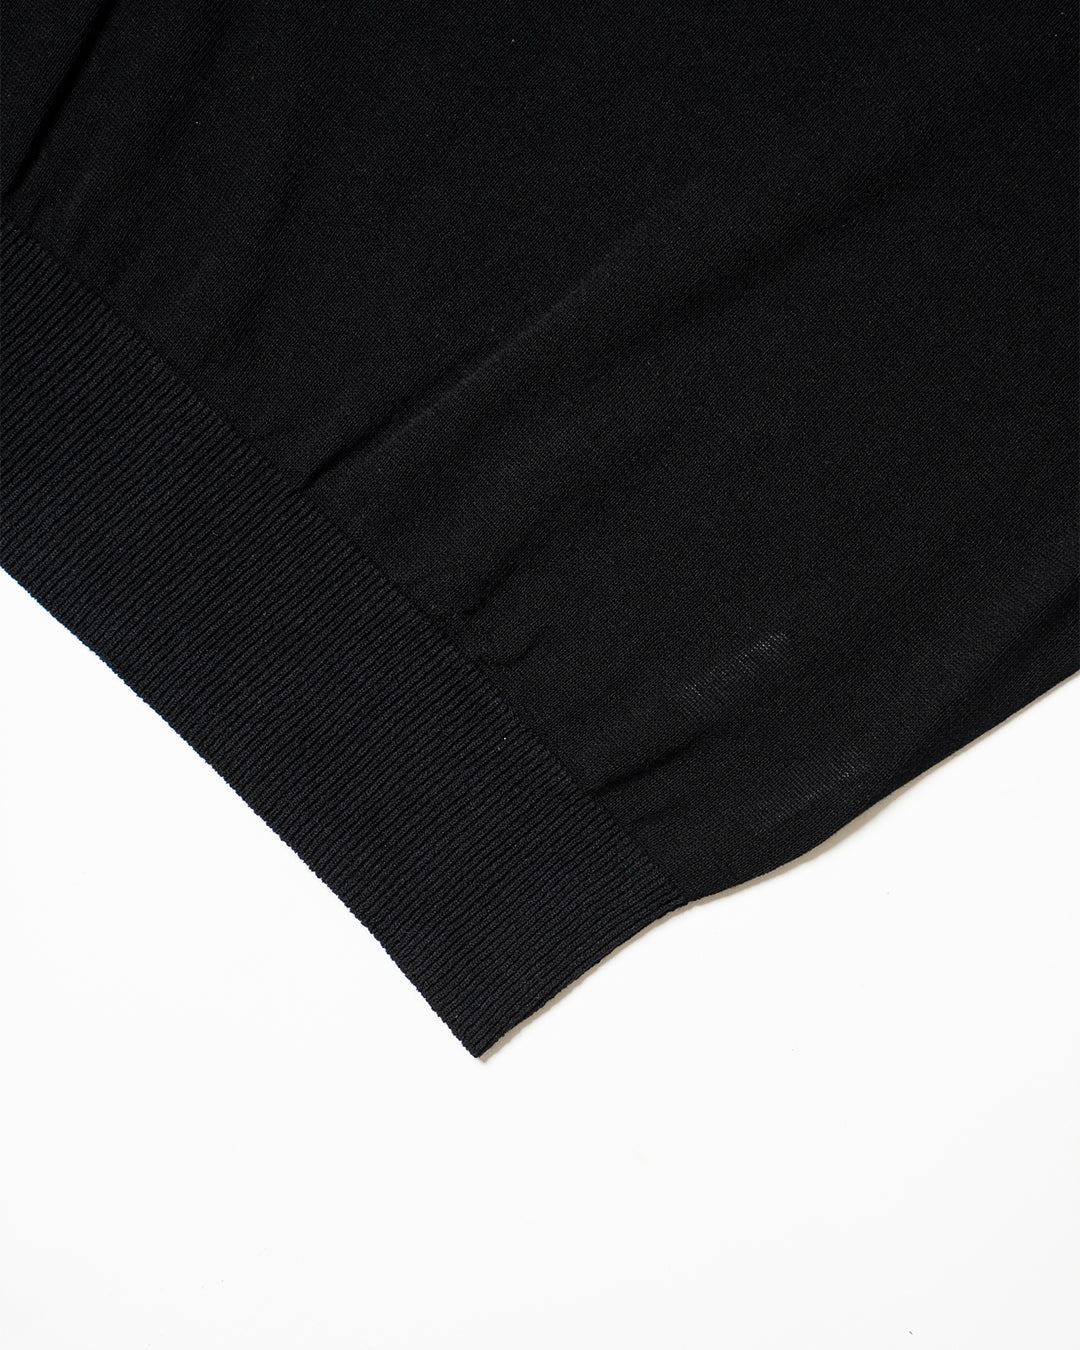 The Decorum Off Duty Black Knit T-Shirt (New)